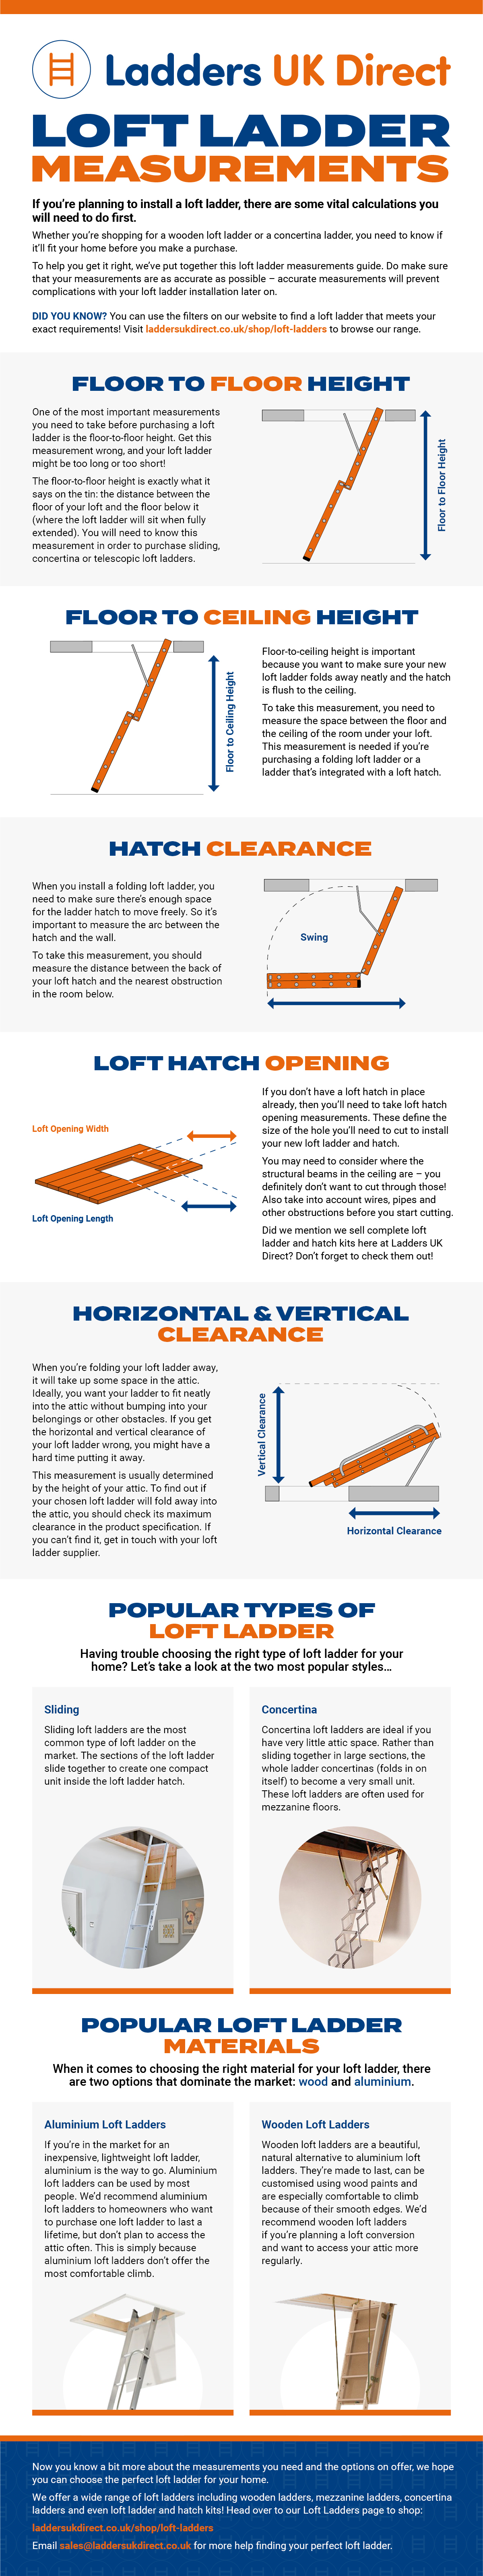 loft ladder measurement infographic